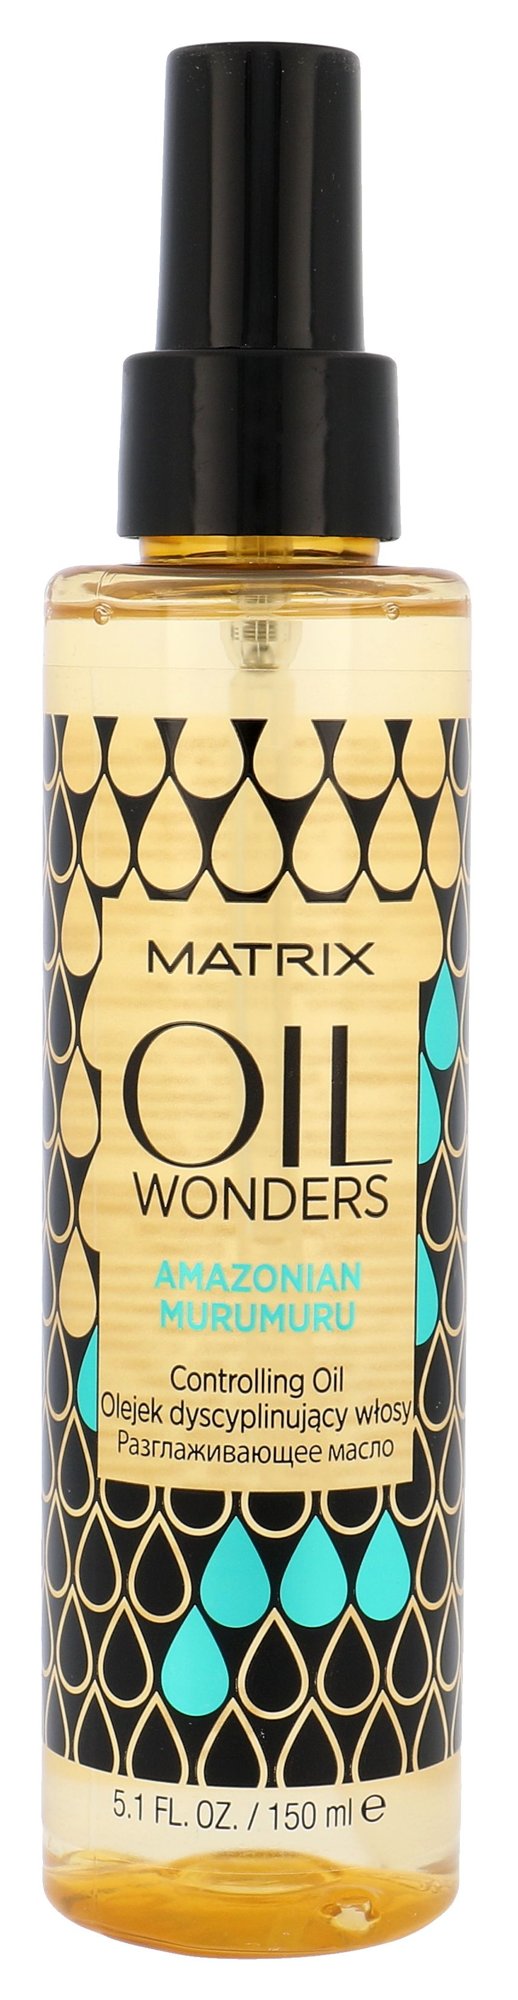 Matrix Oil Wonders Amazonian Murumuru plaukų aliejus